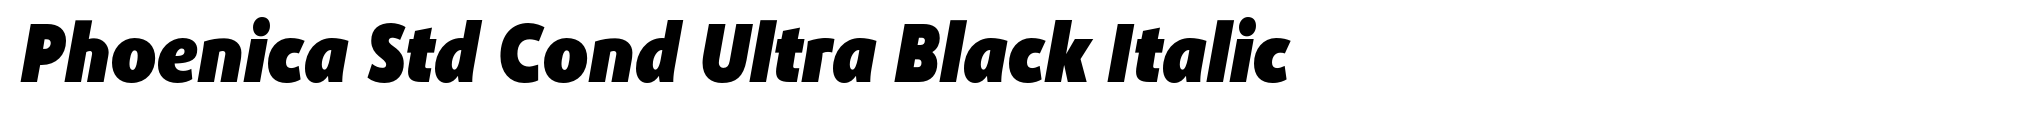 Phoenica Std Cond Ultra Black Italic image